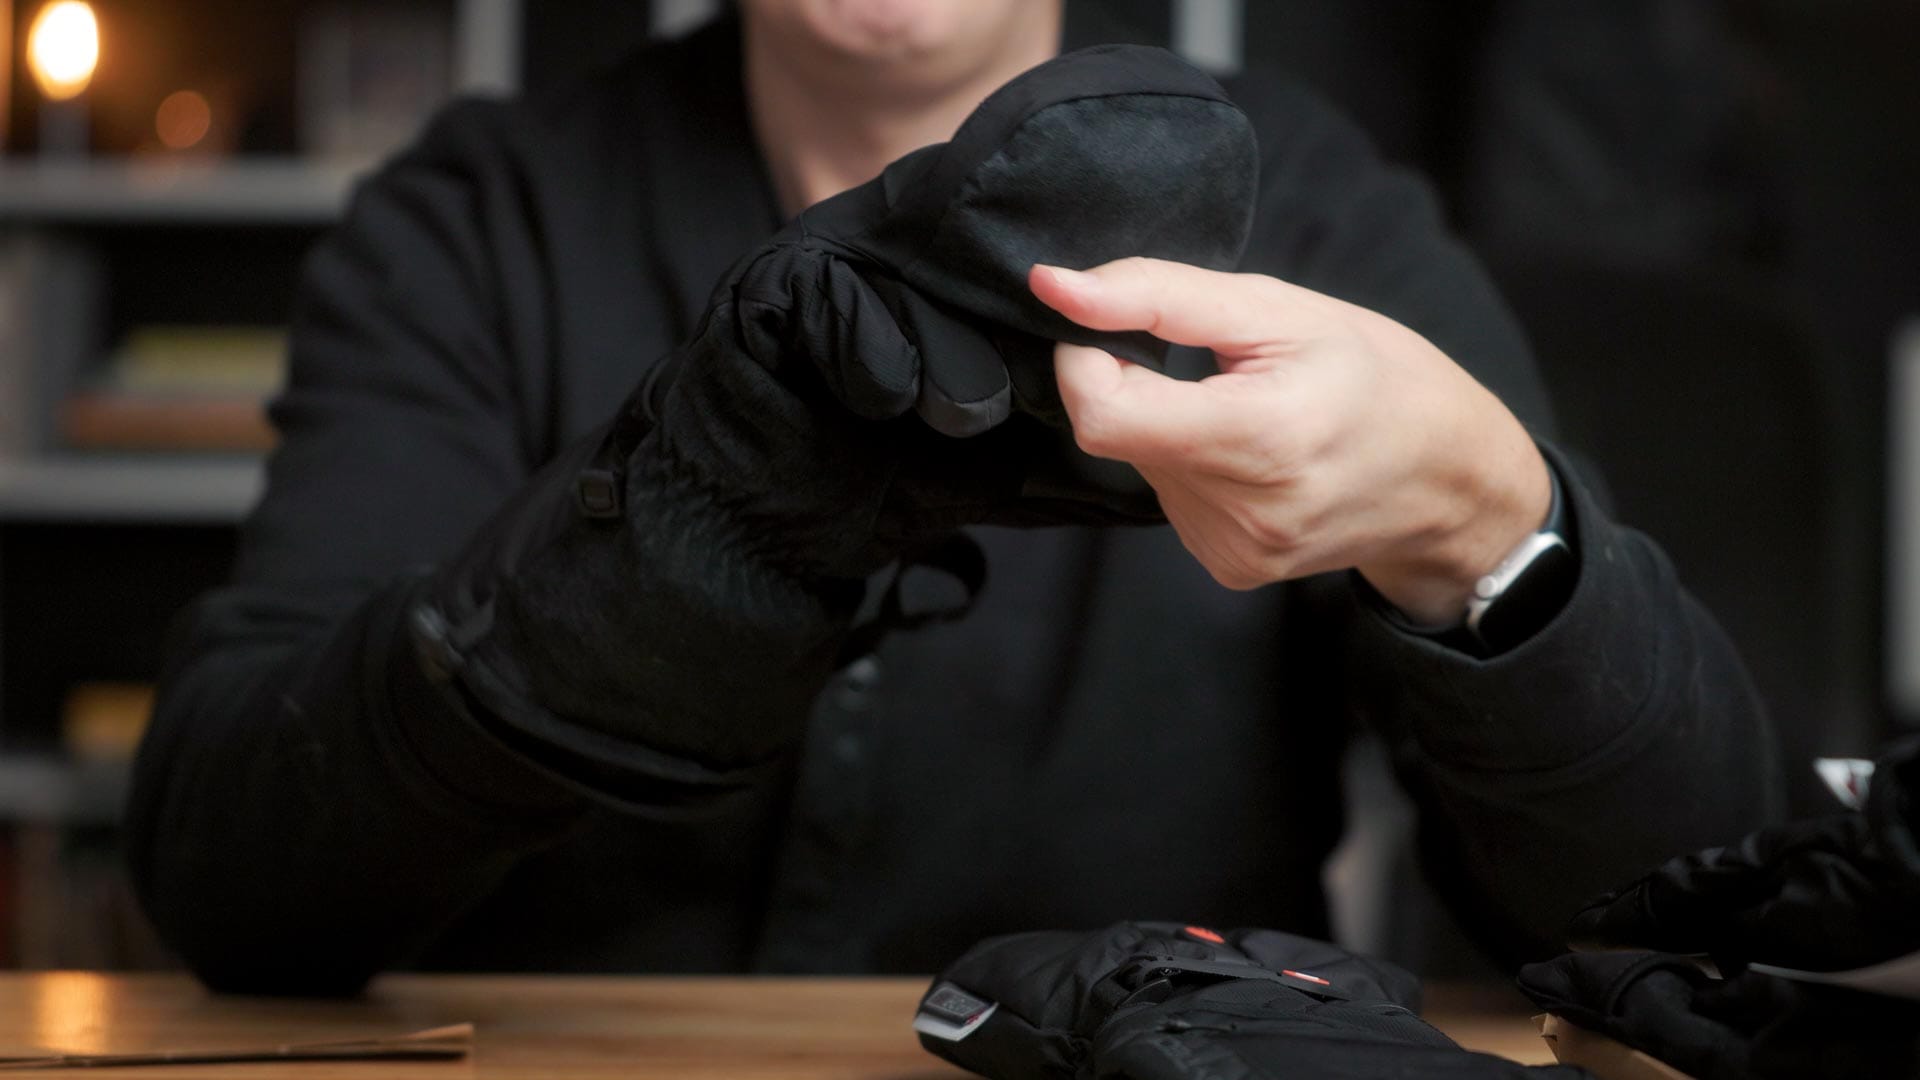 Extra finger hood on the Master gloves